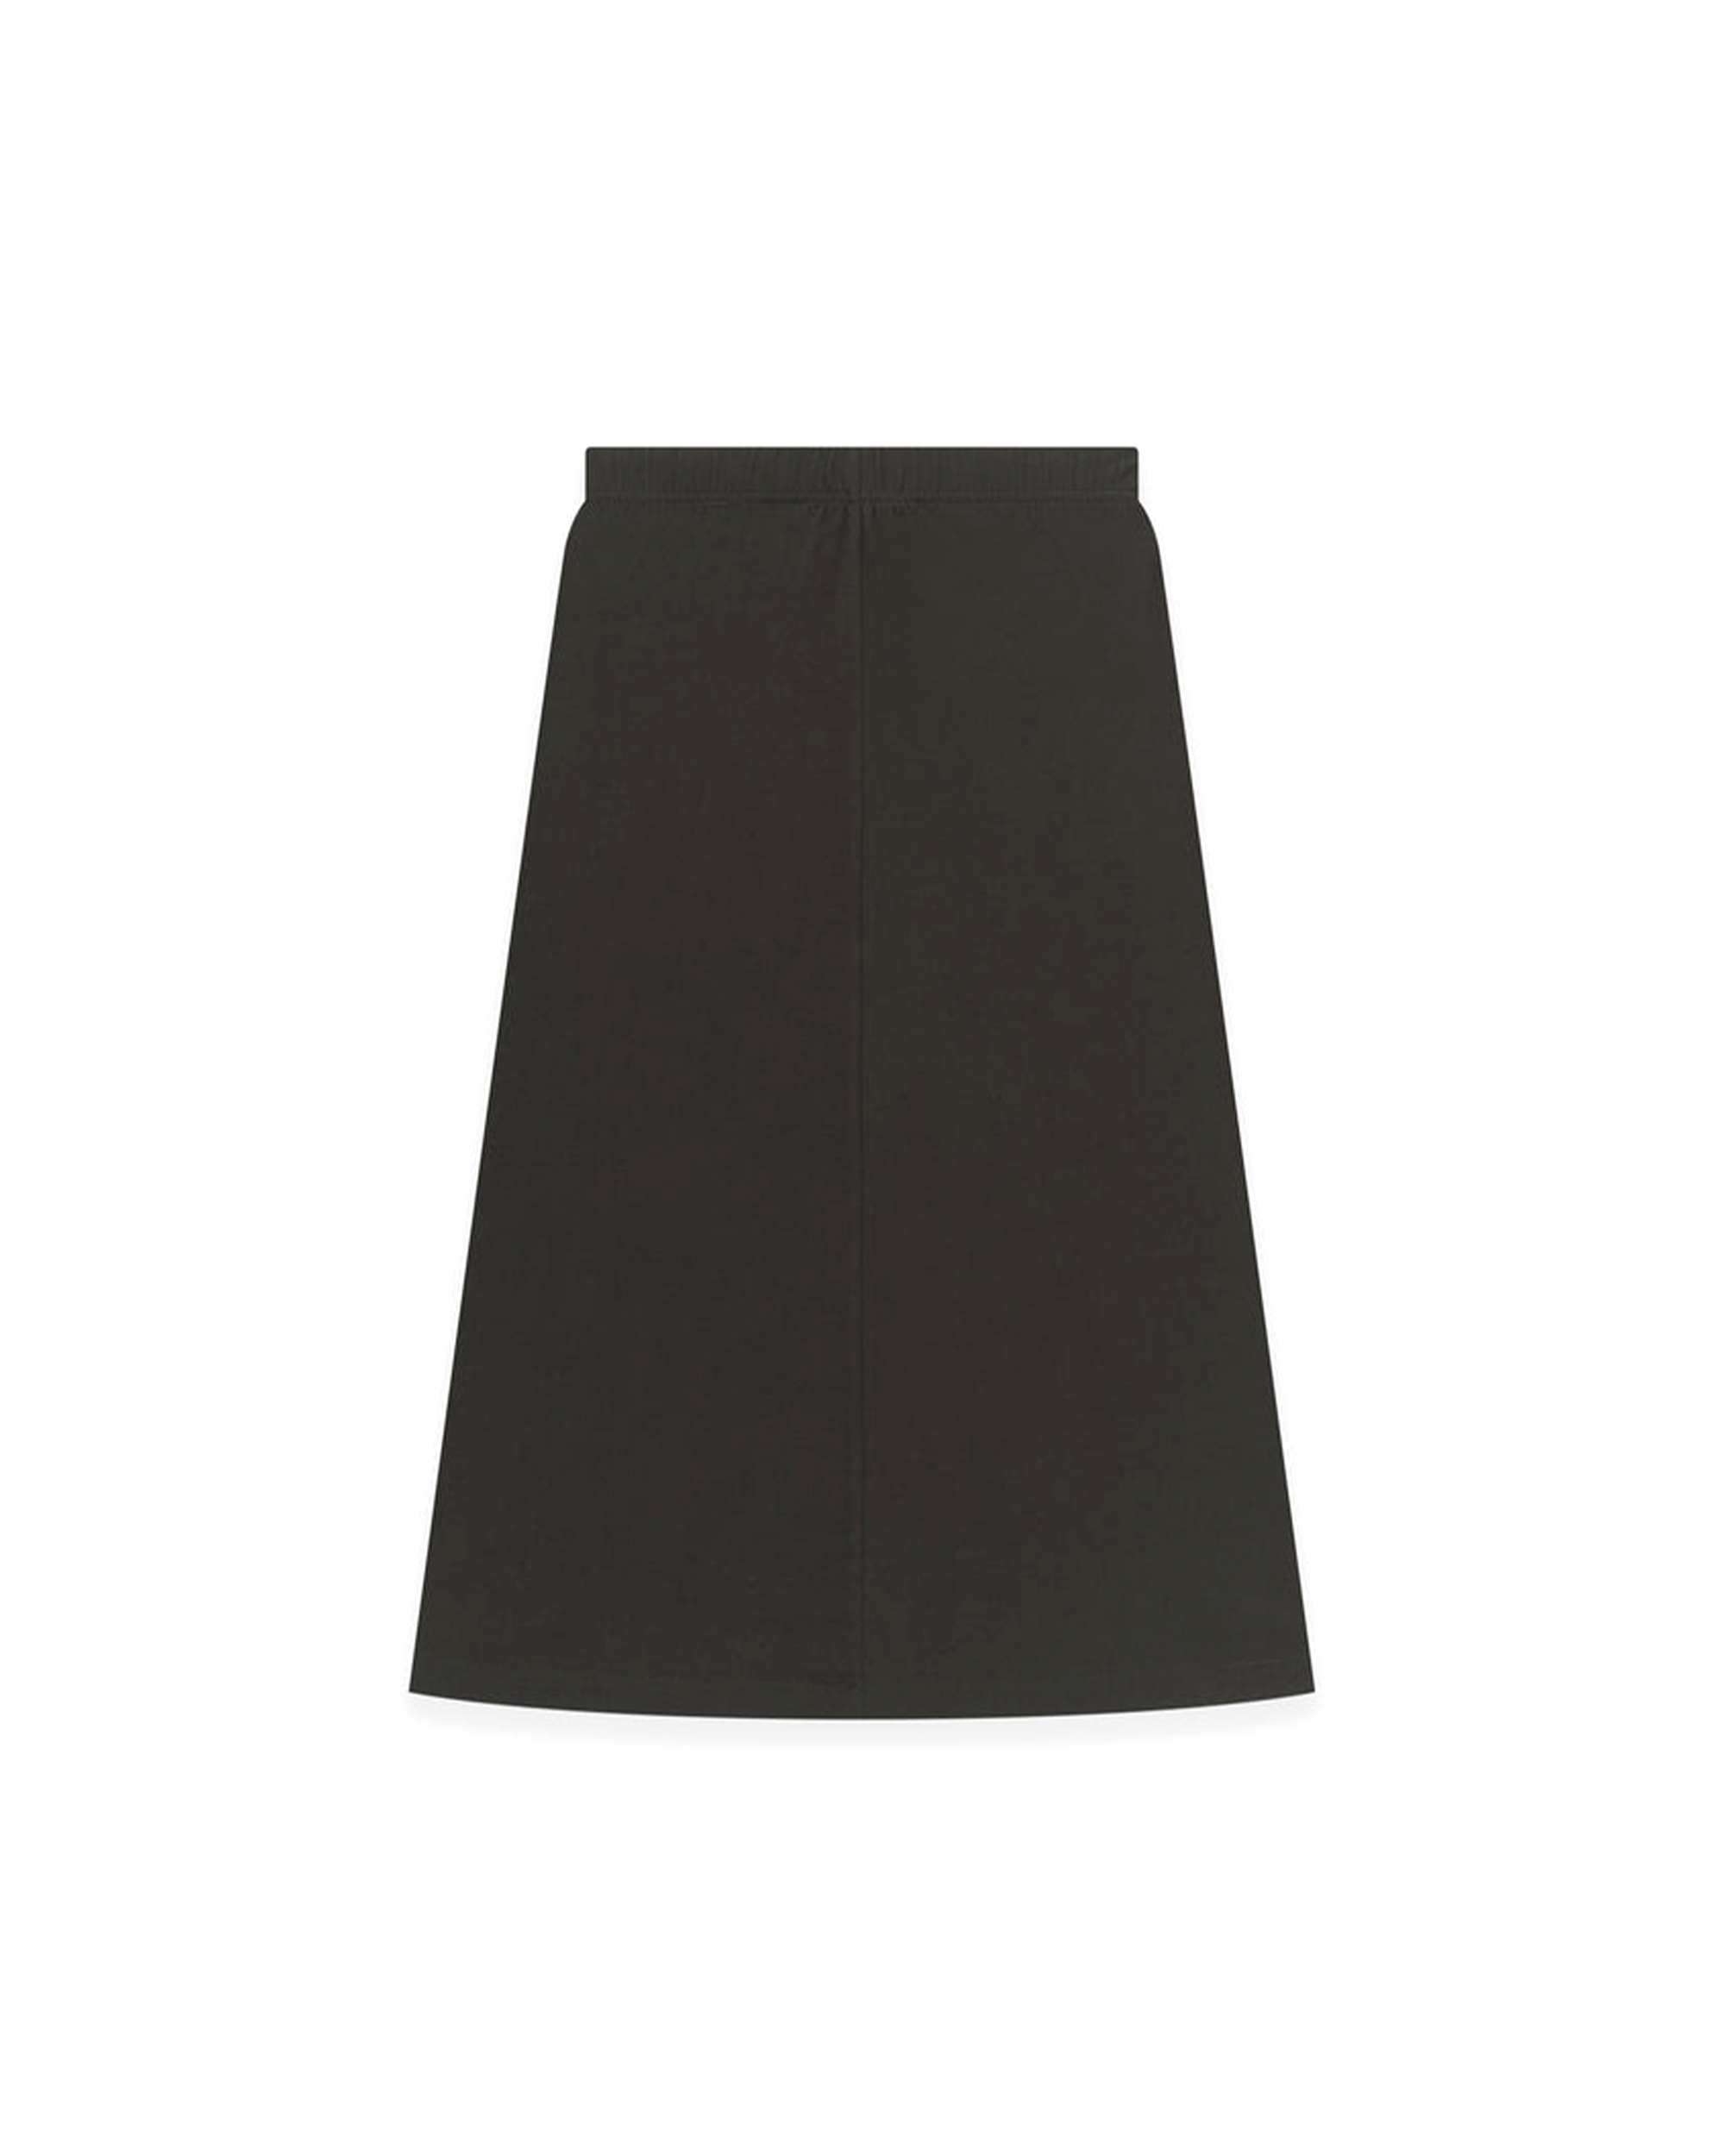 Essentials Skirt - Off Black